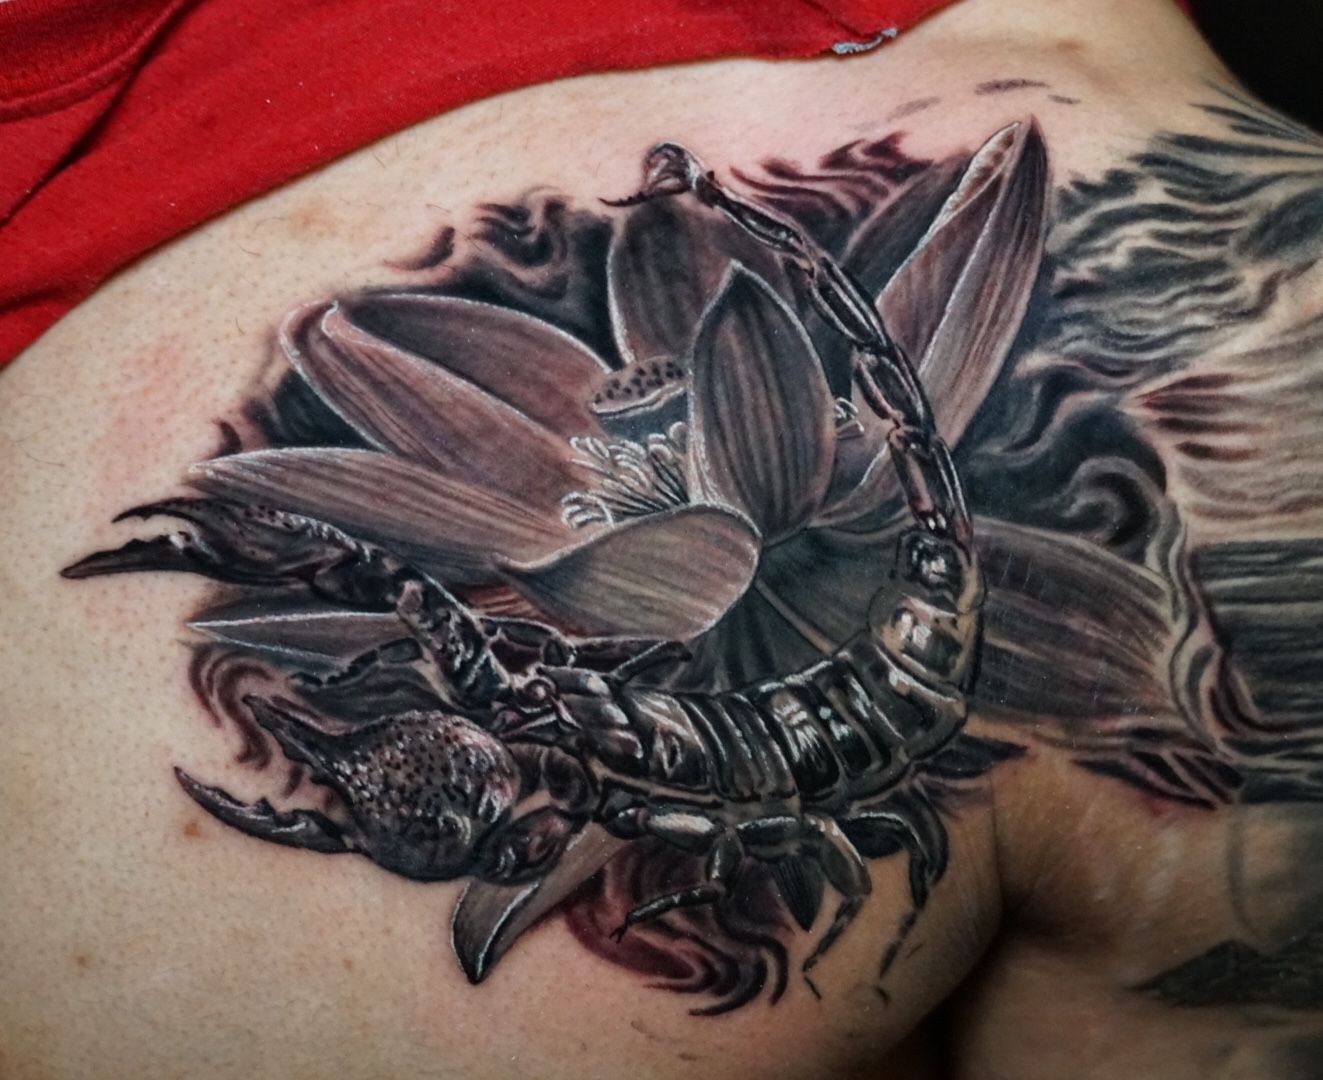 Lighthouse floral tattoo design | Lighthouse tattoo, Tattoo designs, Floral  tattoo design